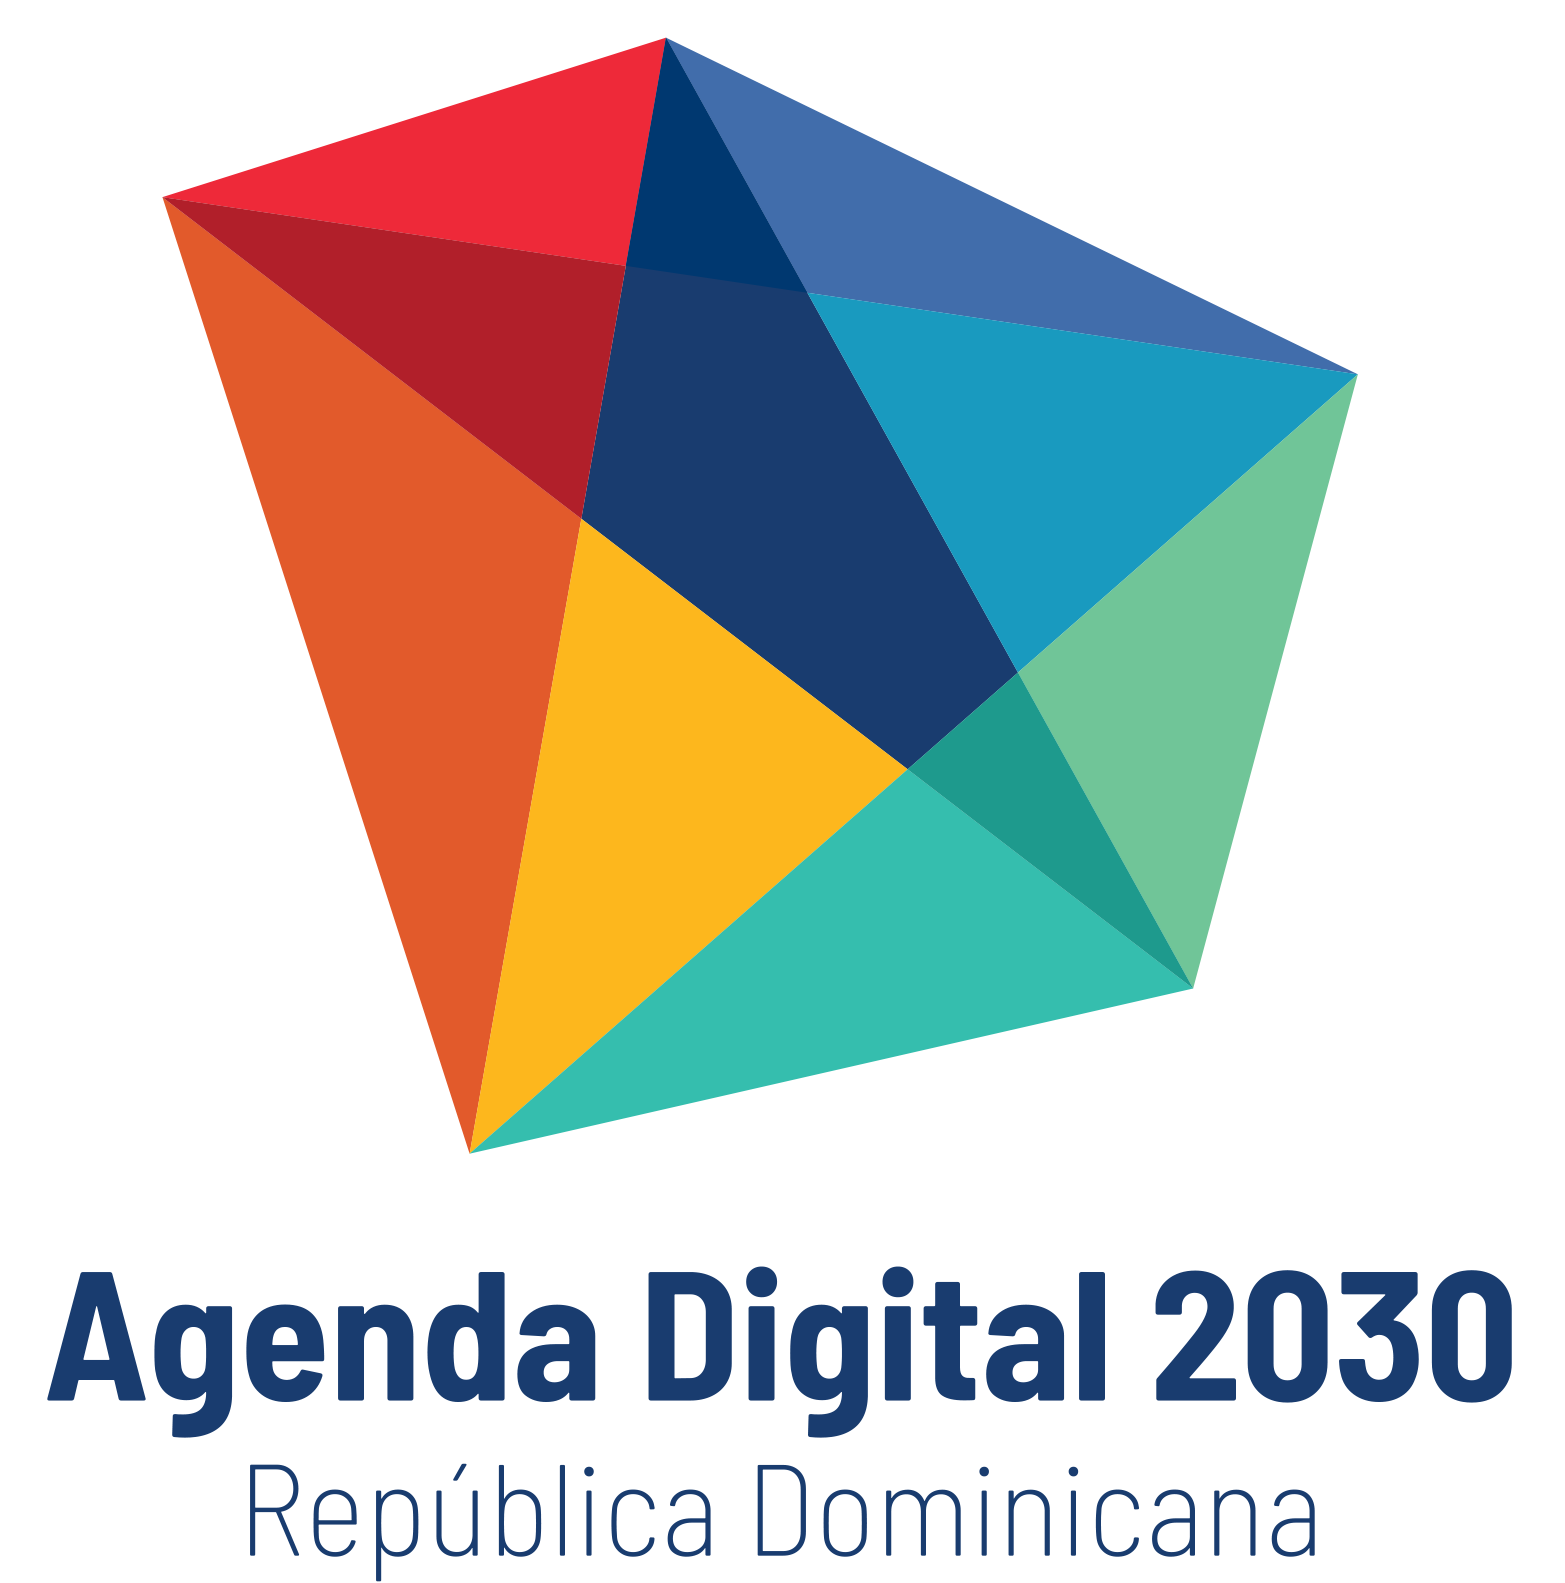 Agenda Digital 2030